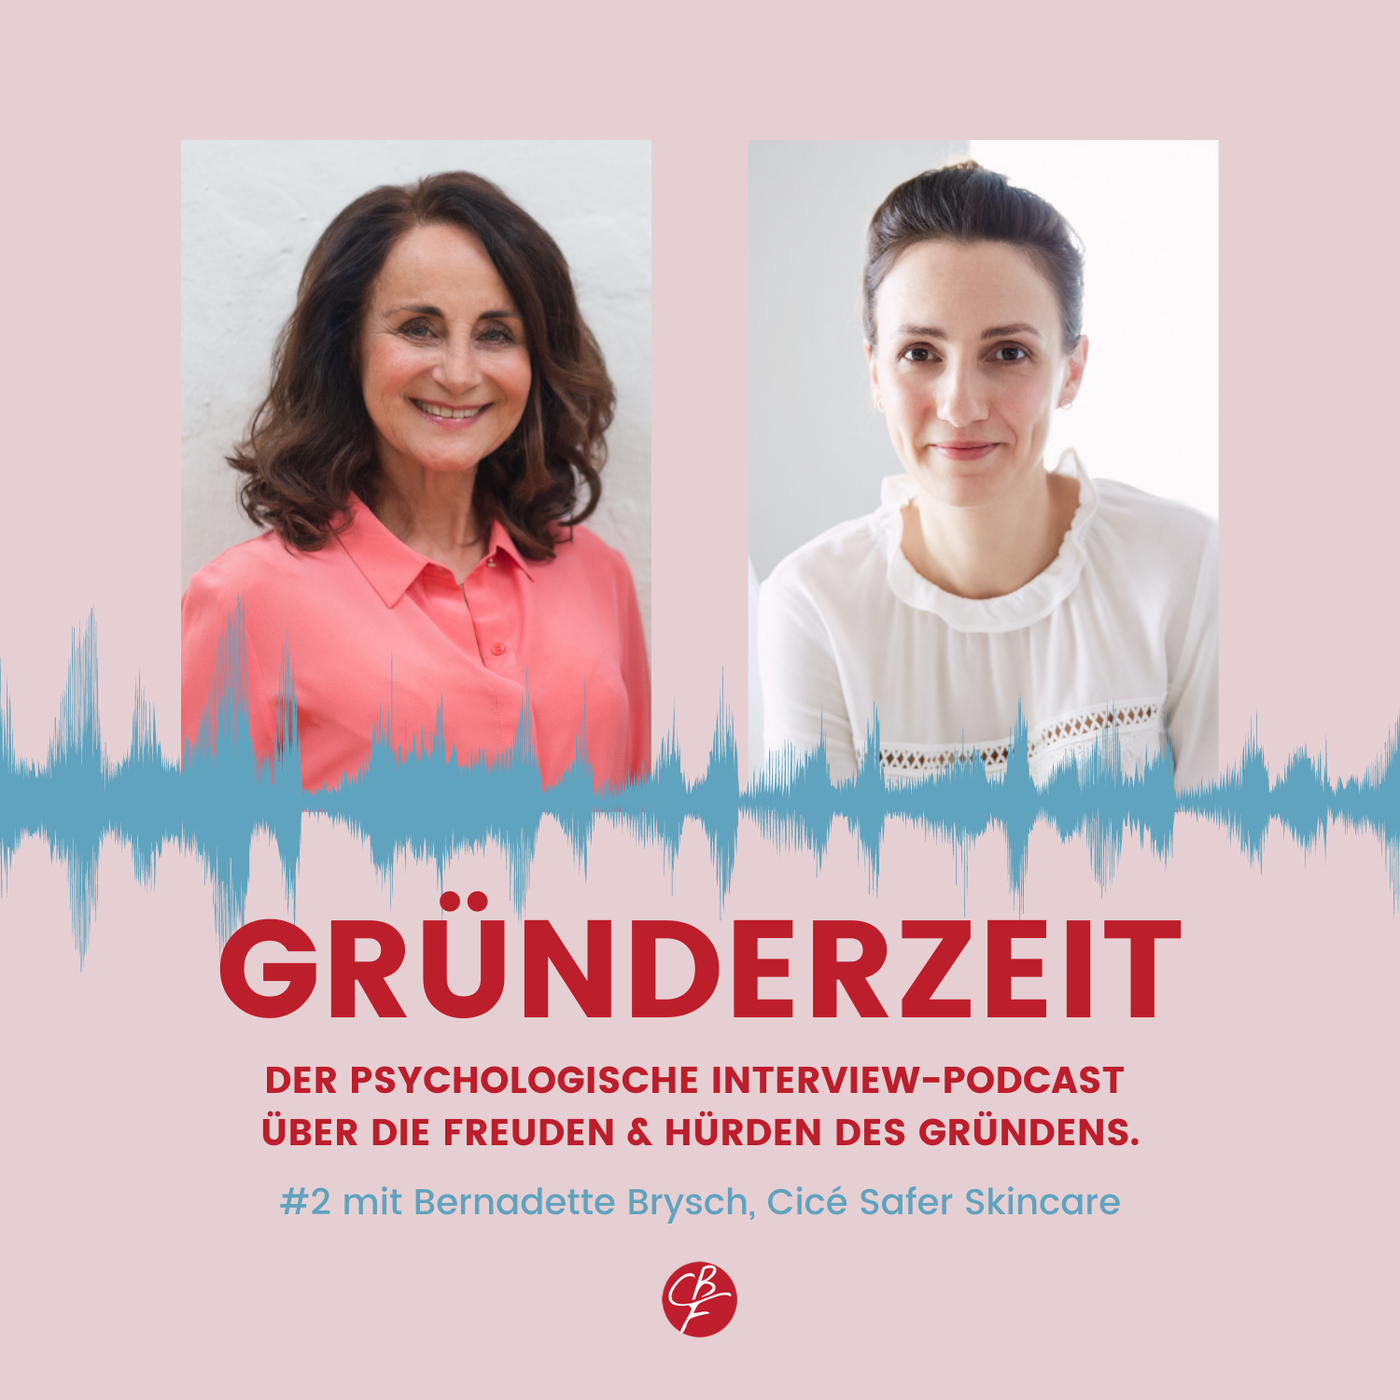 Folge 3, Erster Teil Interview mit Bernadette Brysch, Cicé Safer Skincare